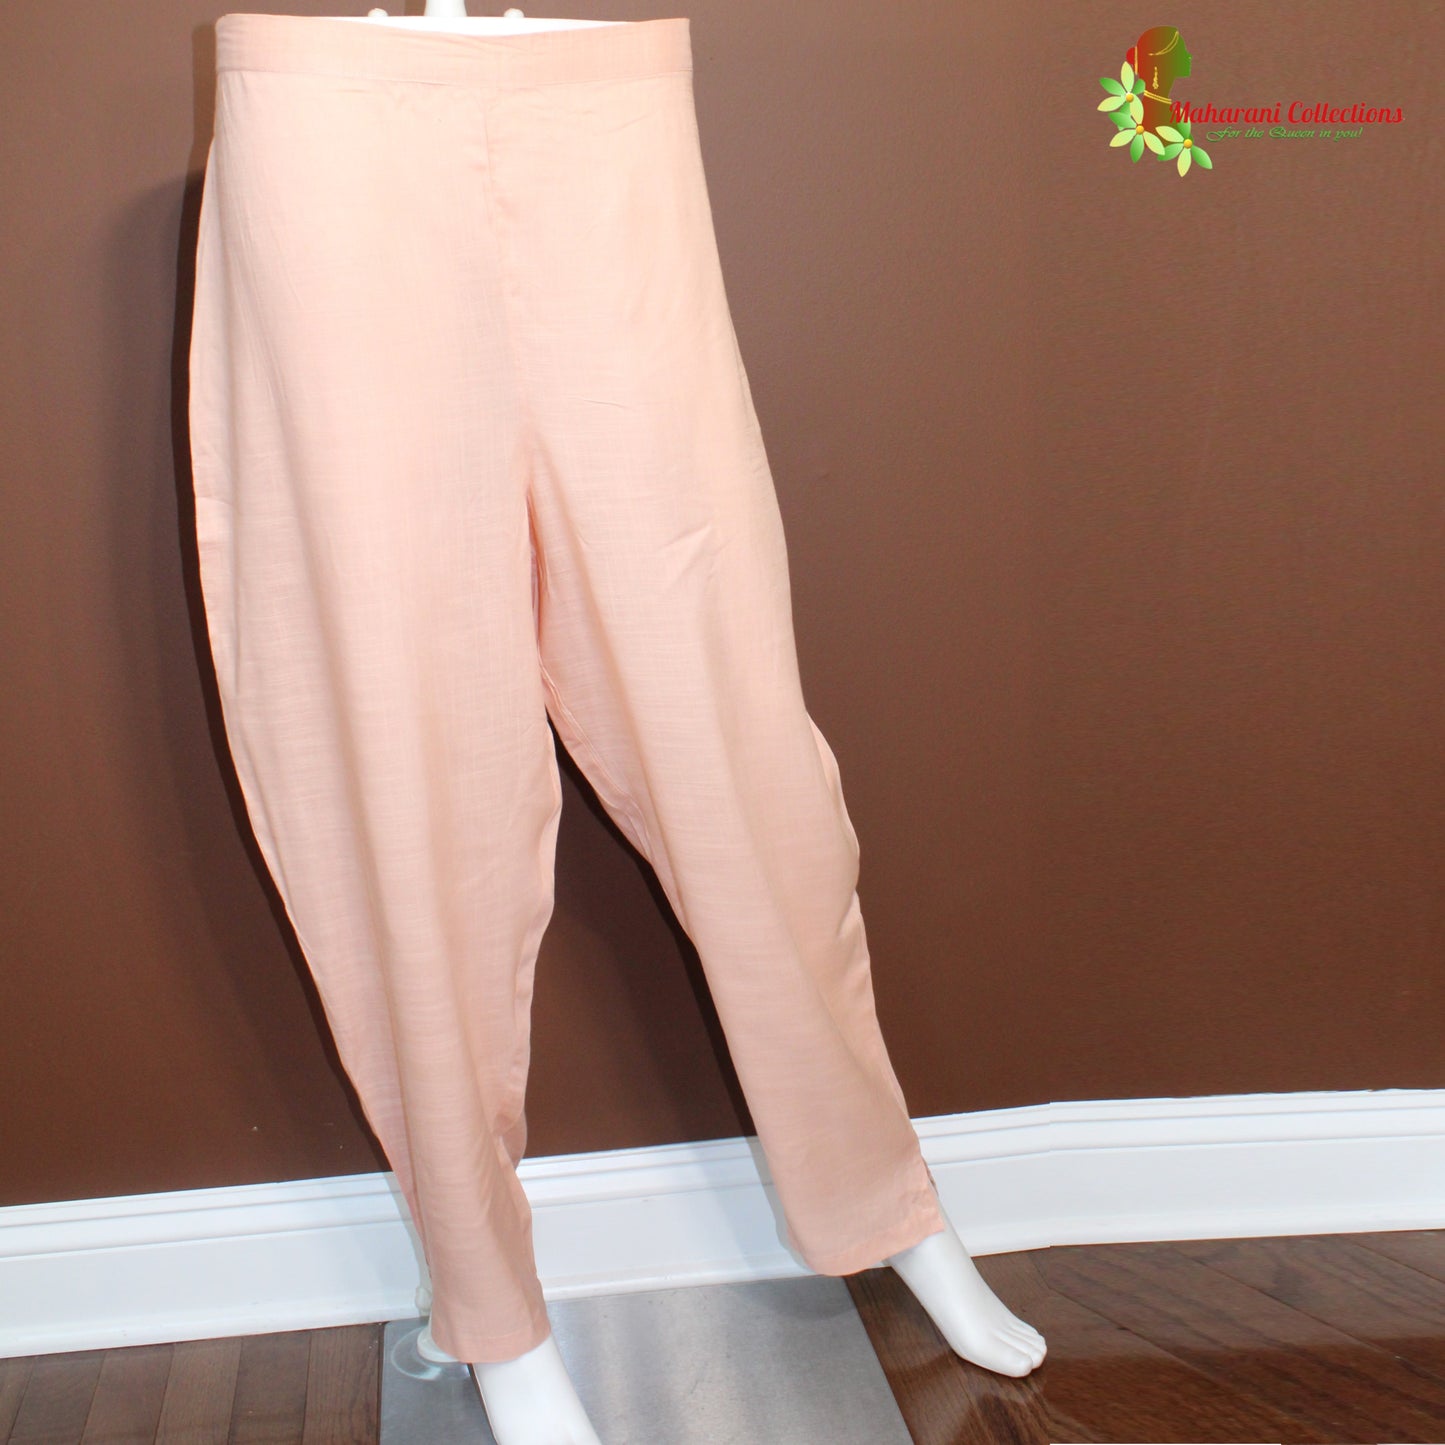 Maharani's Palazzo Suit Set - Cotton Silk - Pink (XL)